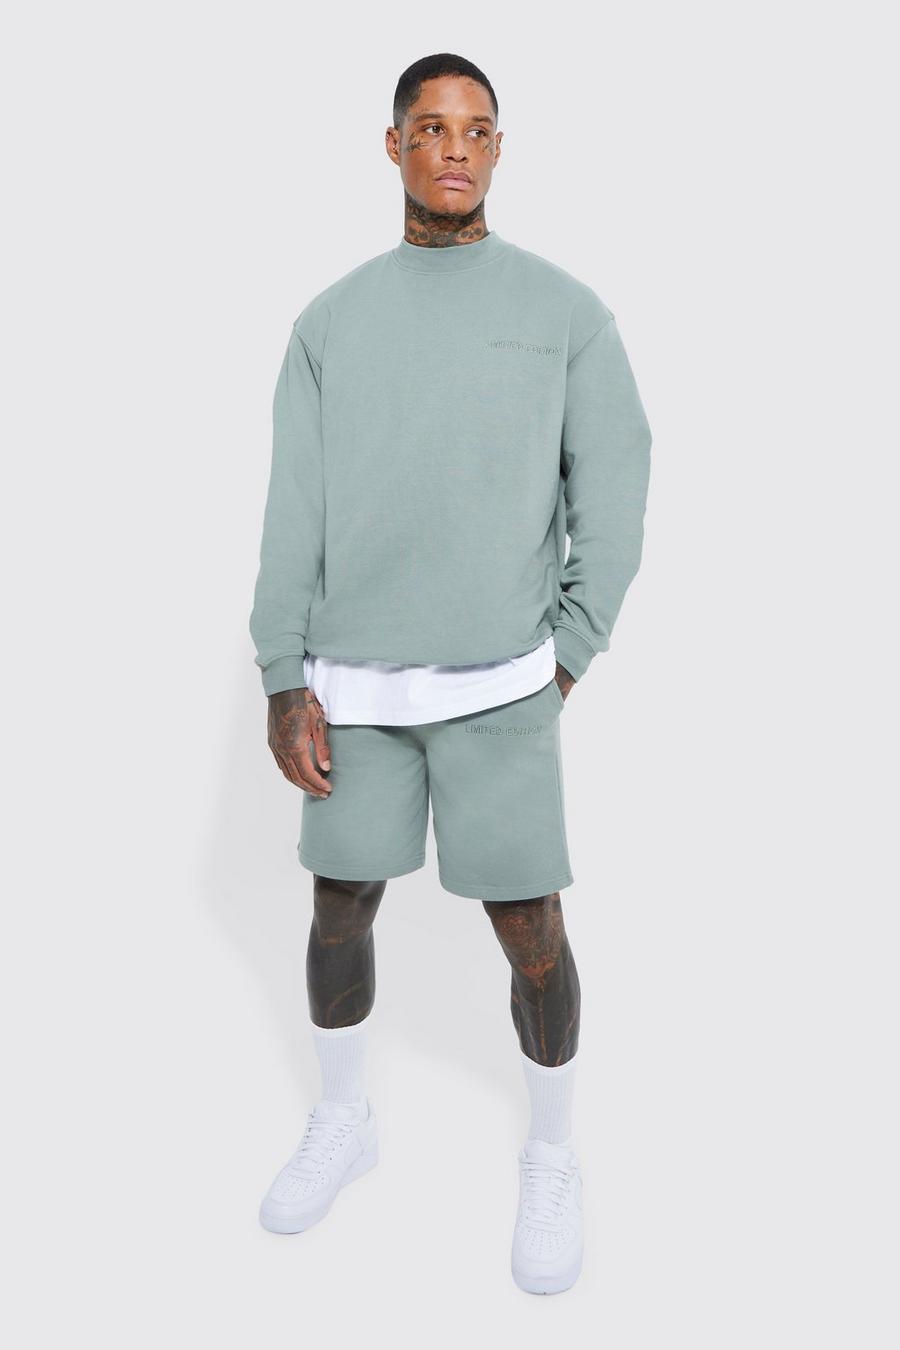 Kurzer Oversize Sweatshirt-Trainingsanzug, Dusty green grün